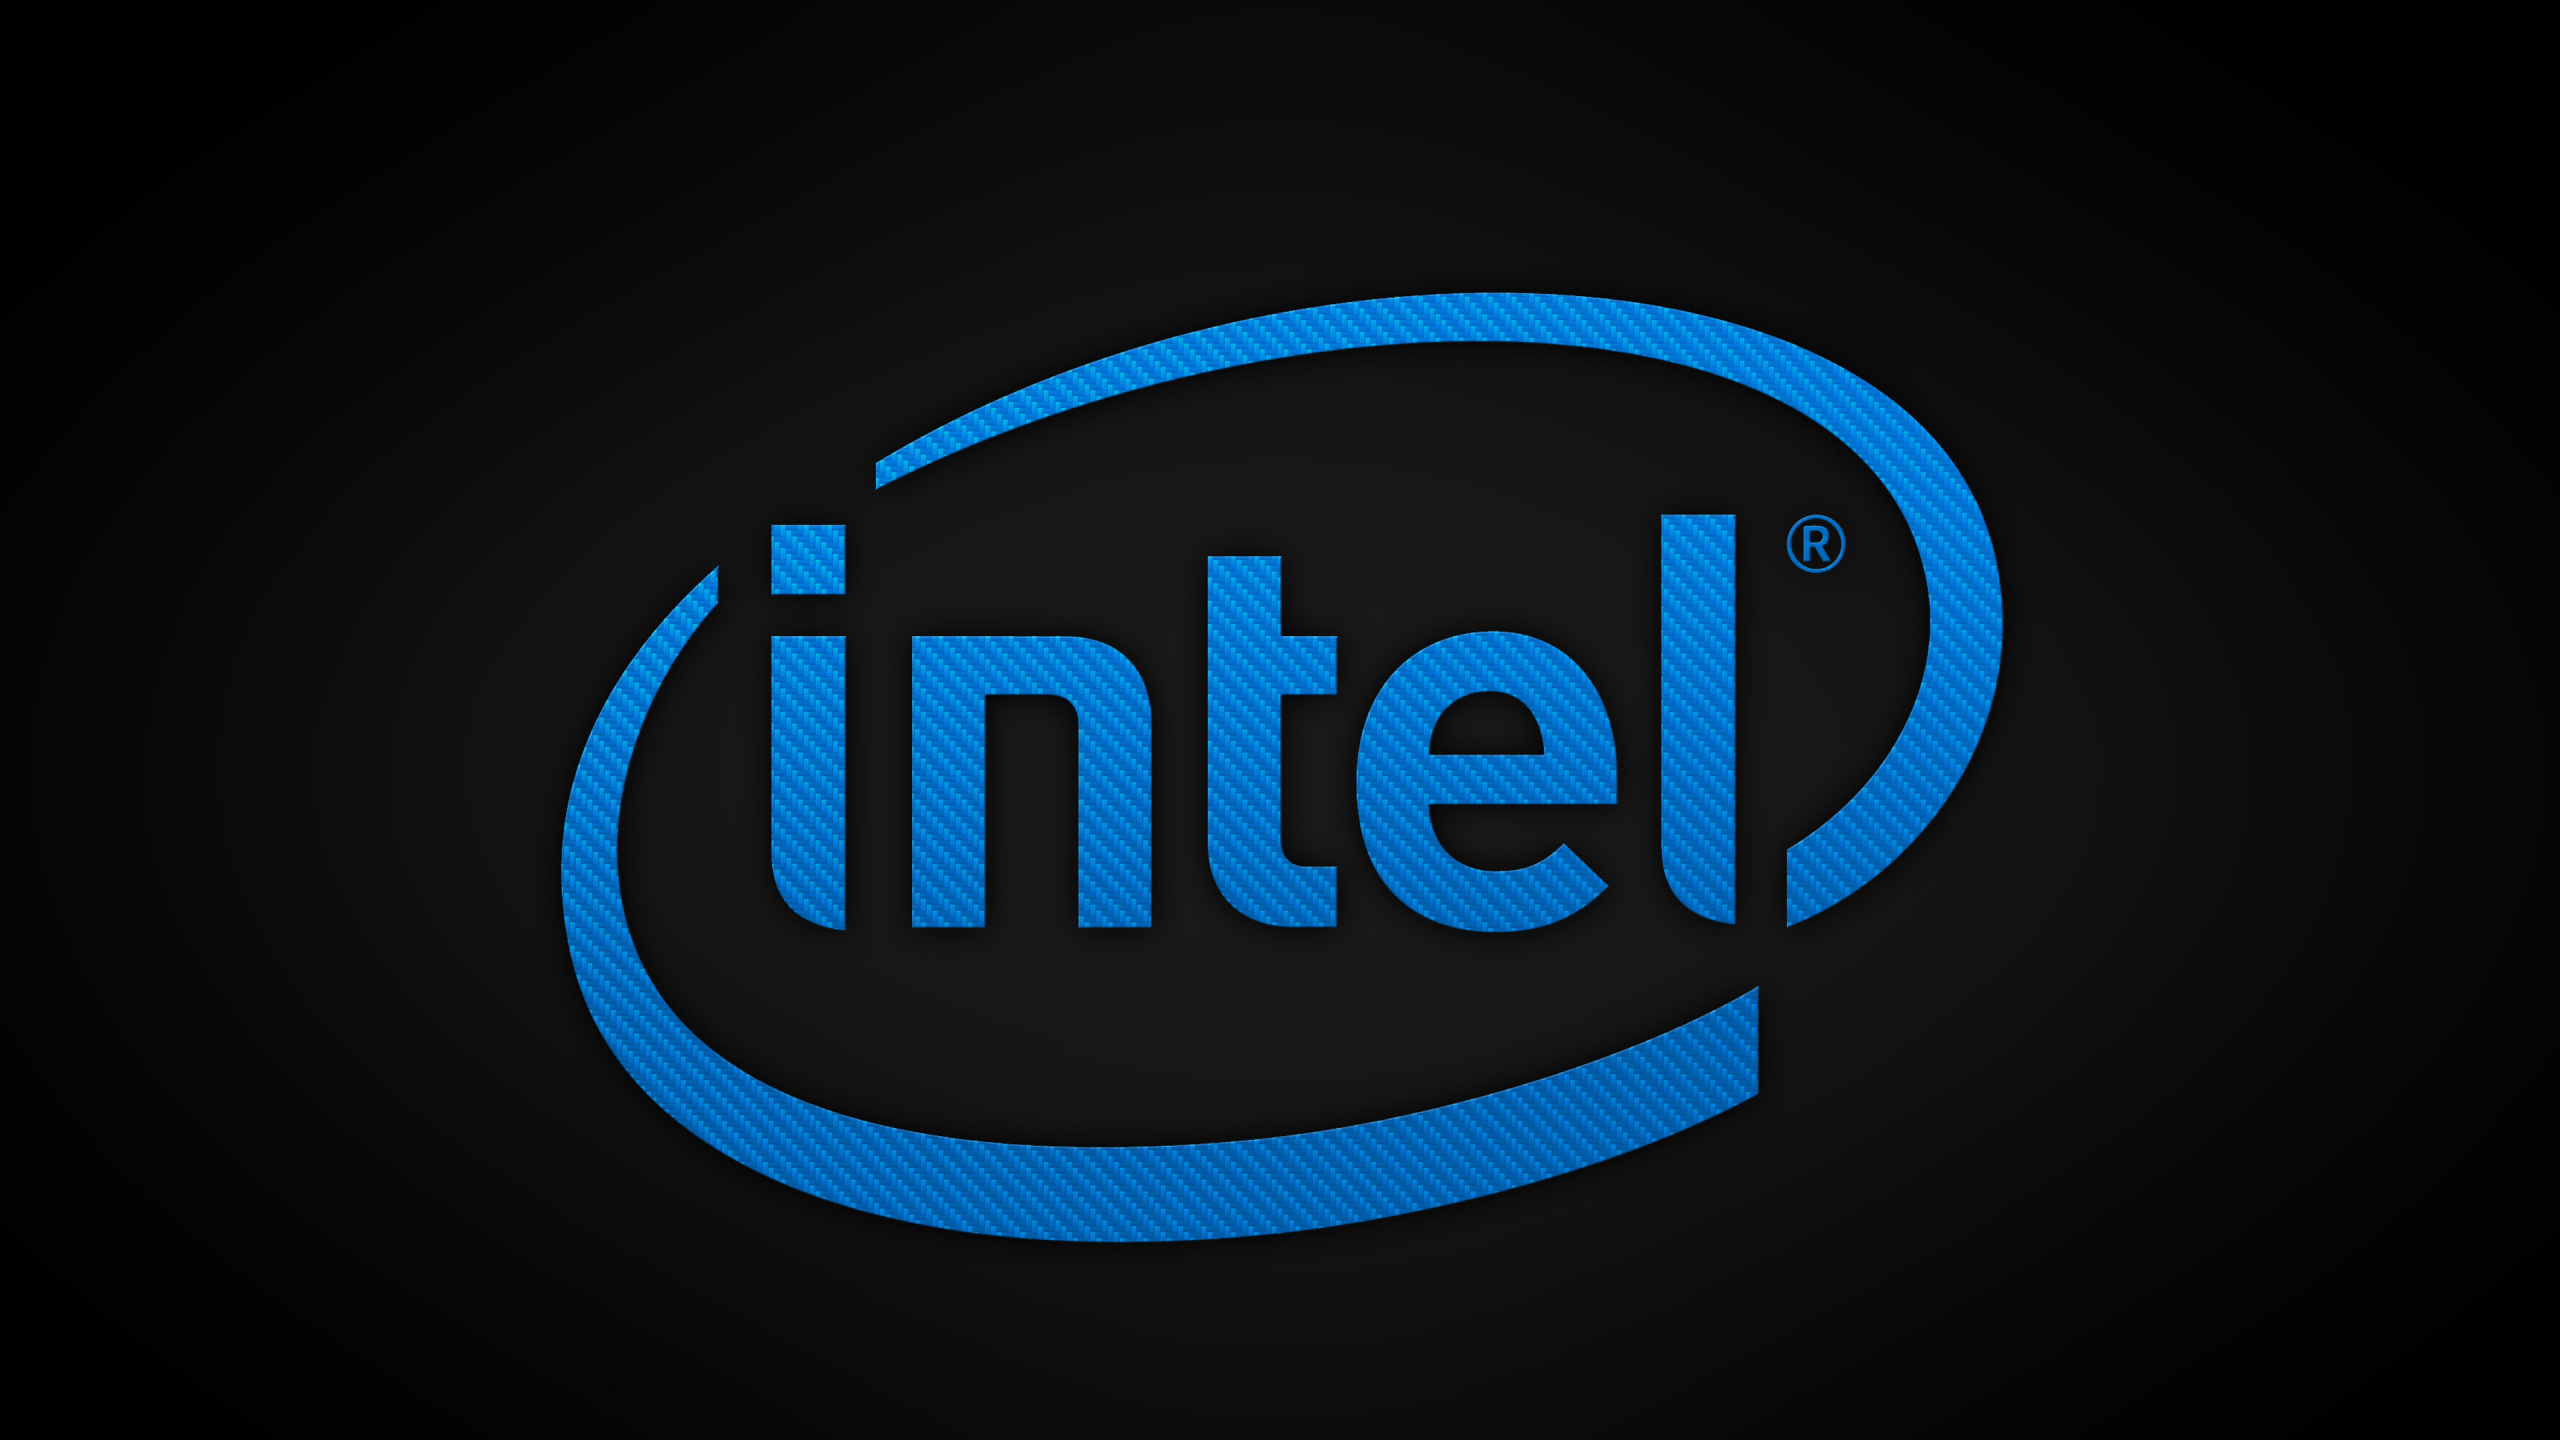 Intel Core logo